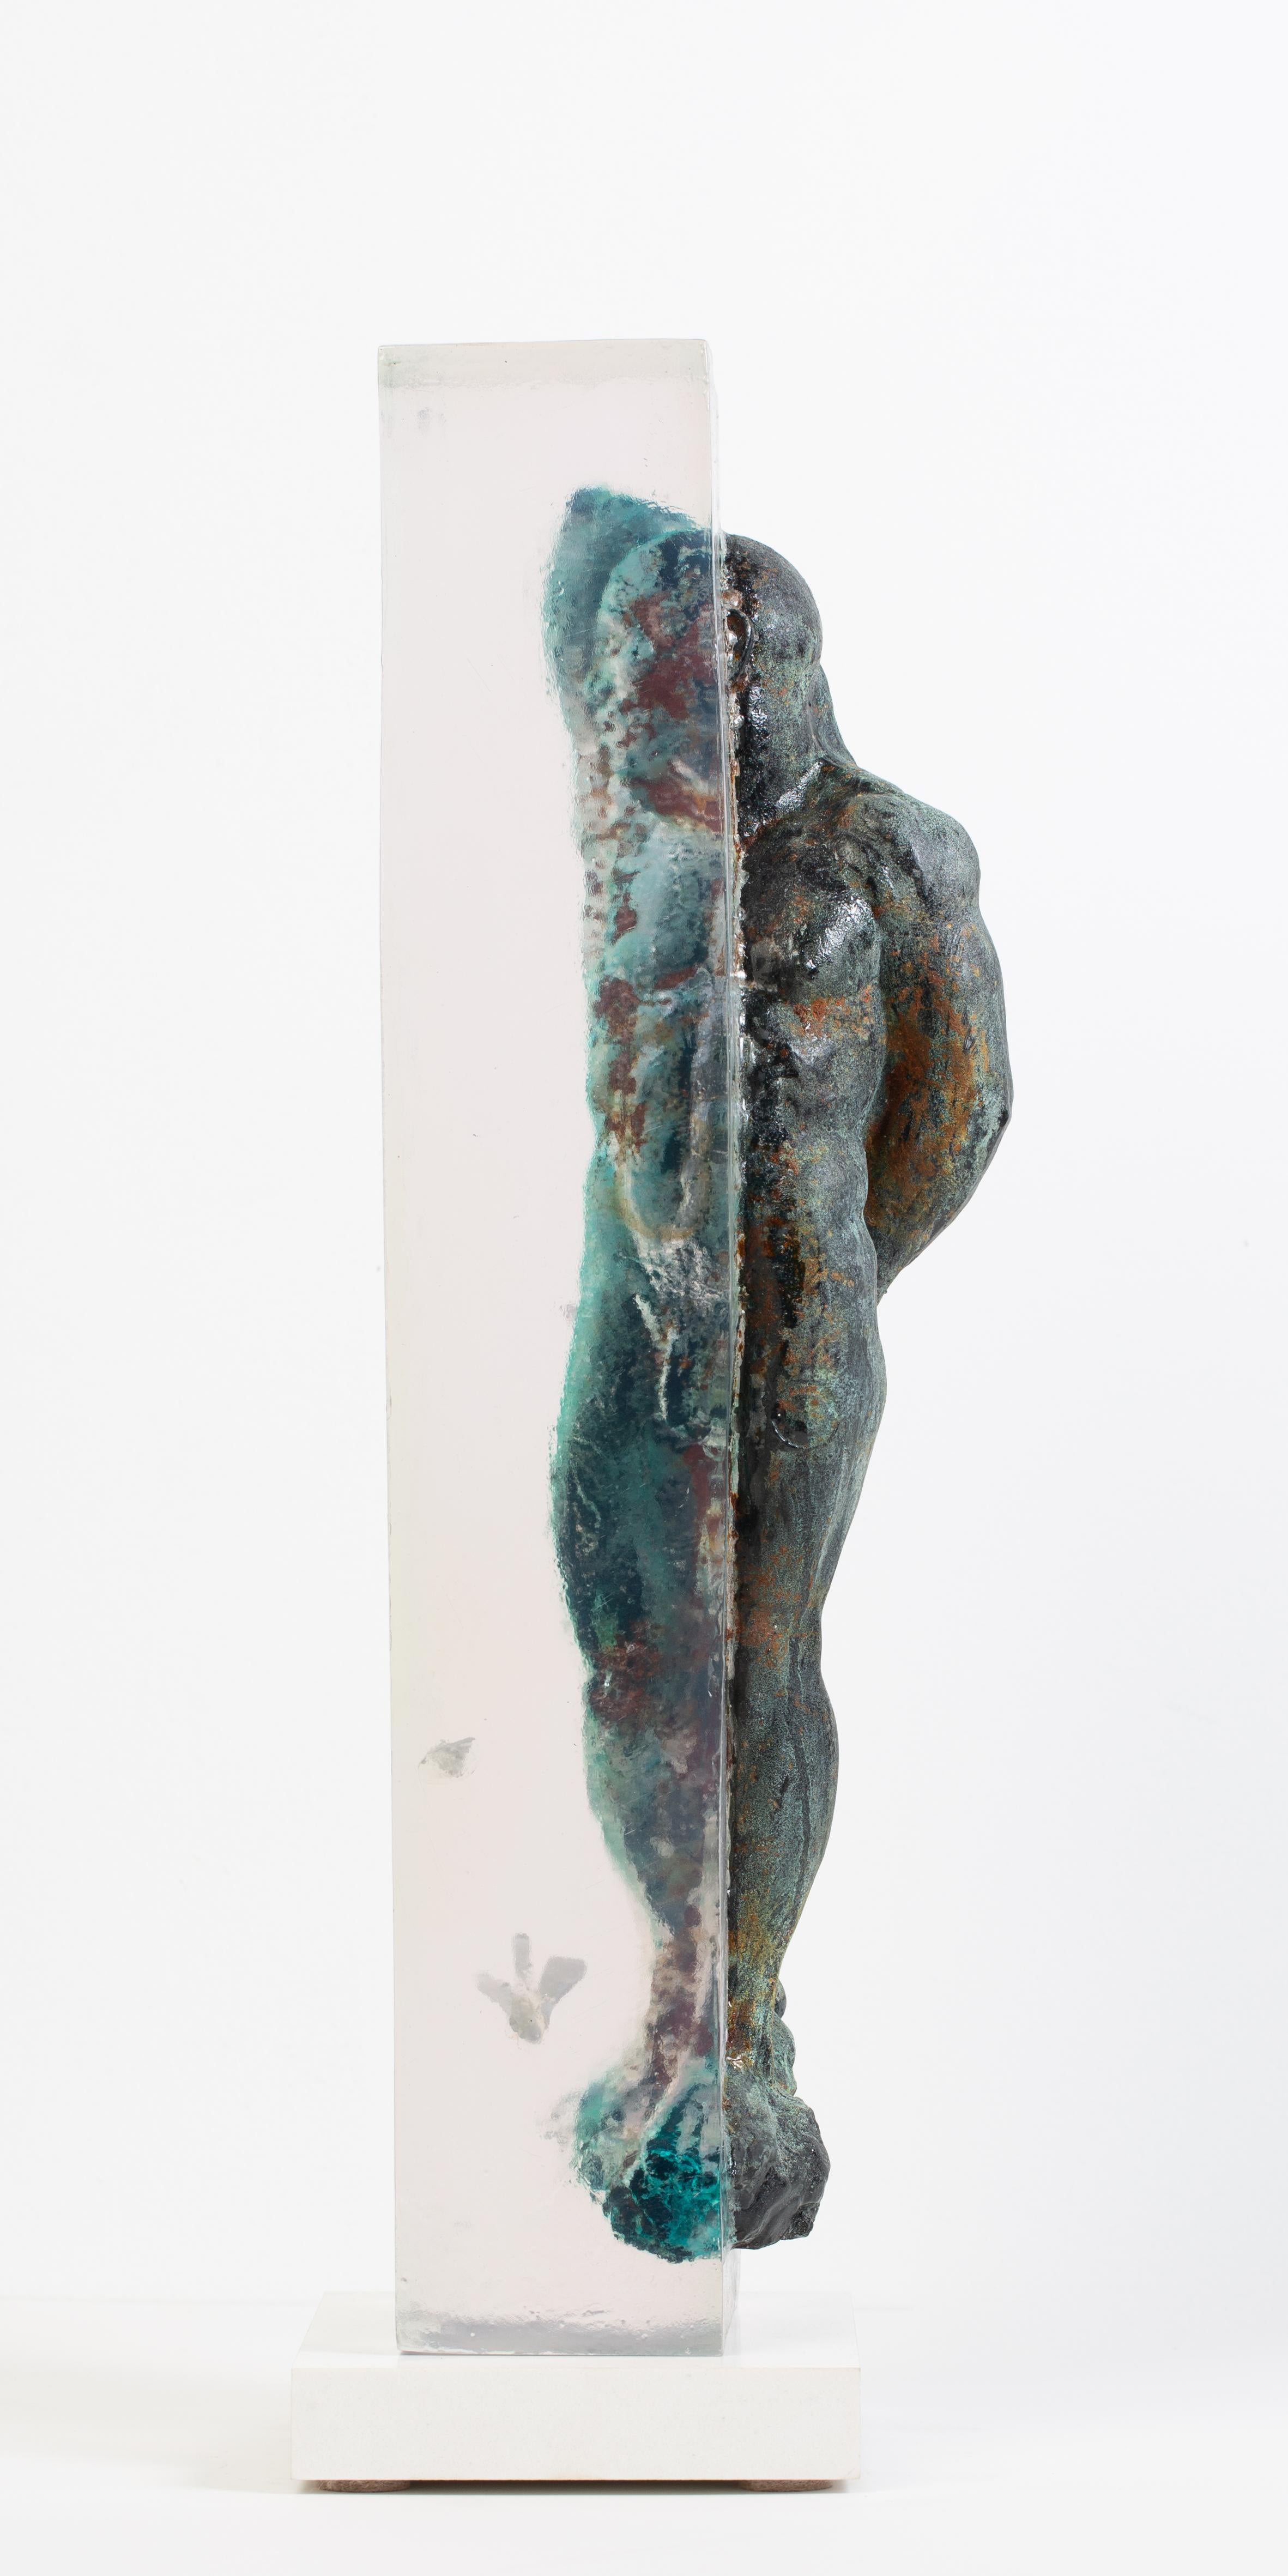 Dean Kugler Nude Sculpture - Embedded Slave - After Michelangelo, Sculpture Half Embedded in Clear Resin